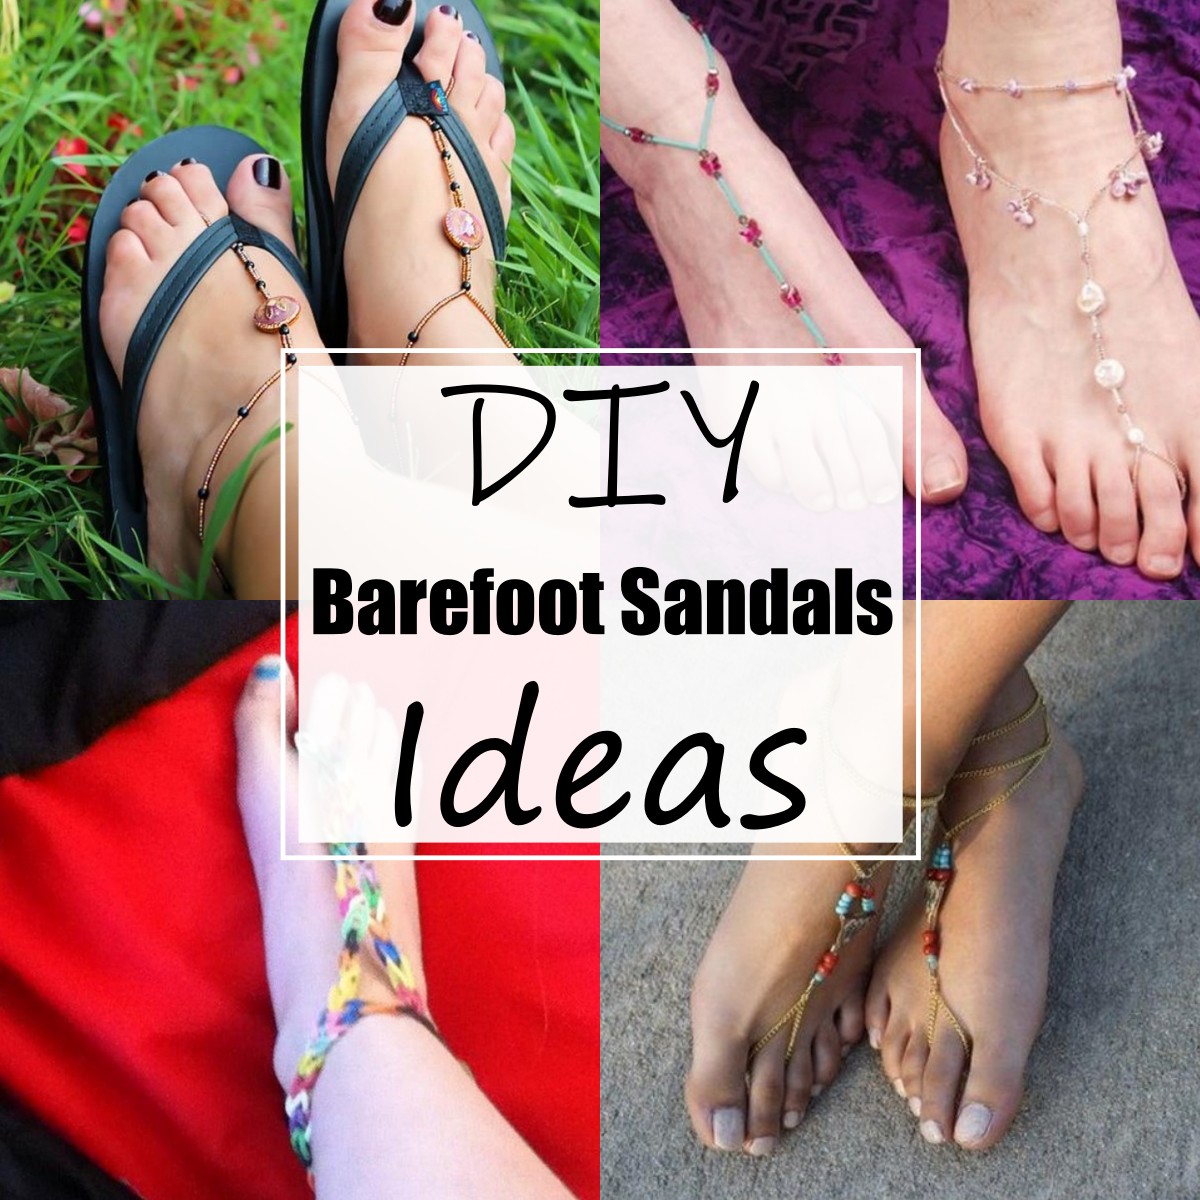 25 DIY Barefoot Sandal Ideas For Ladies - All Sands